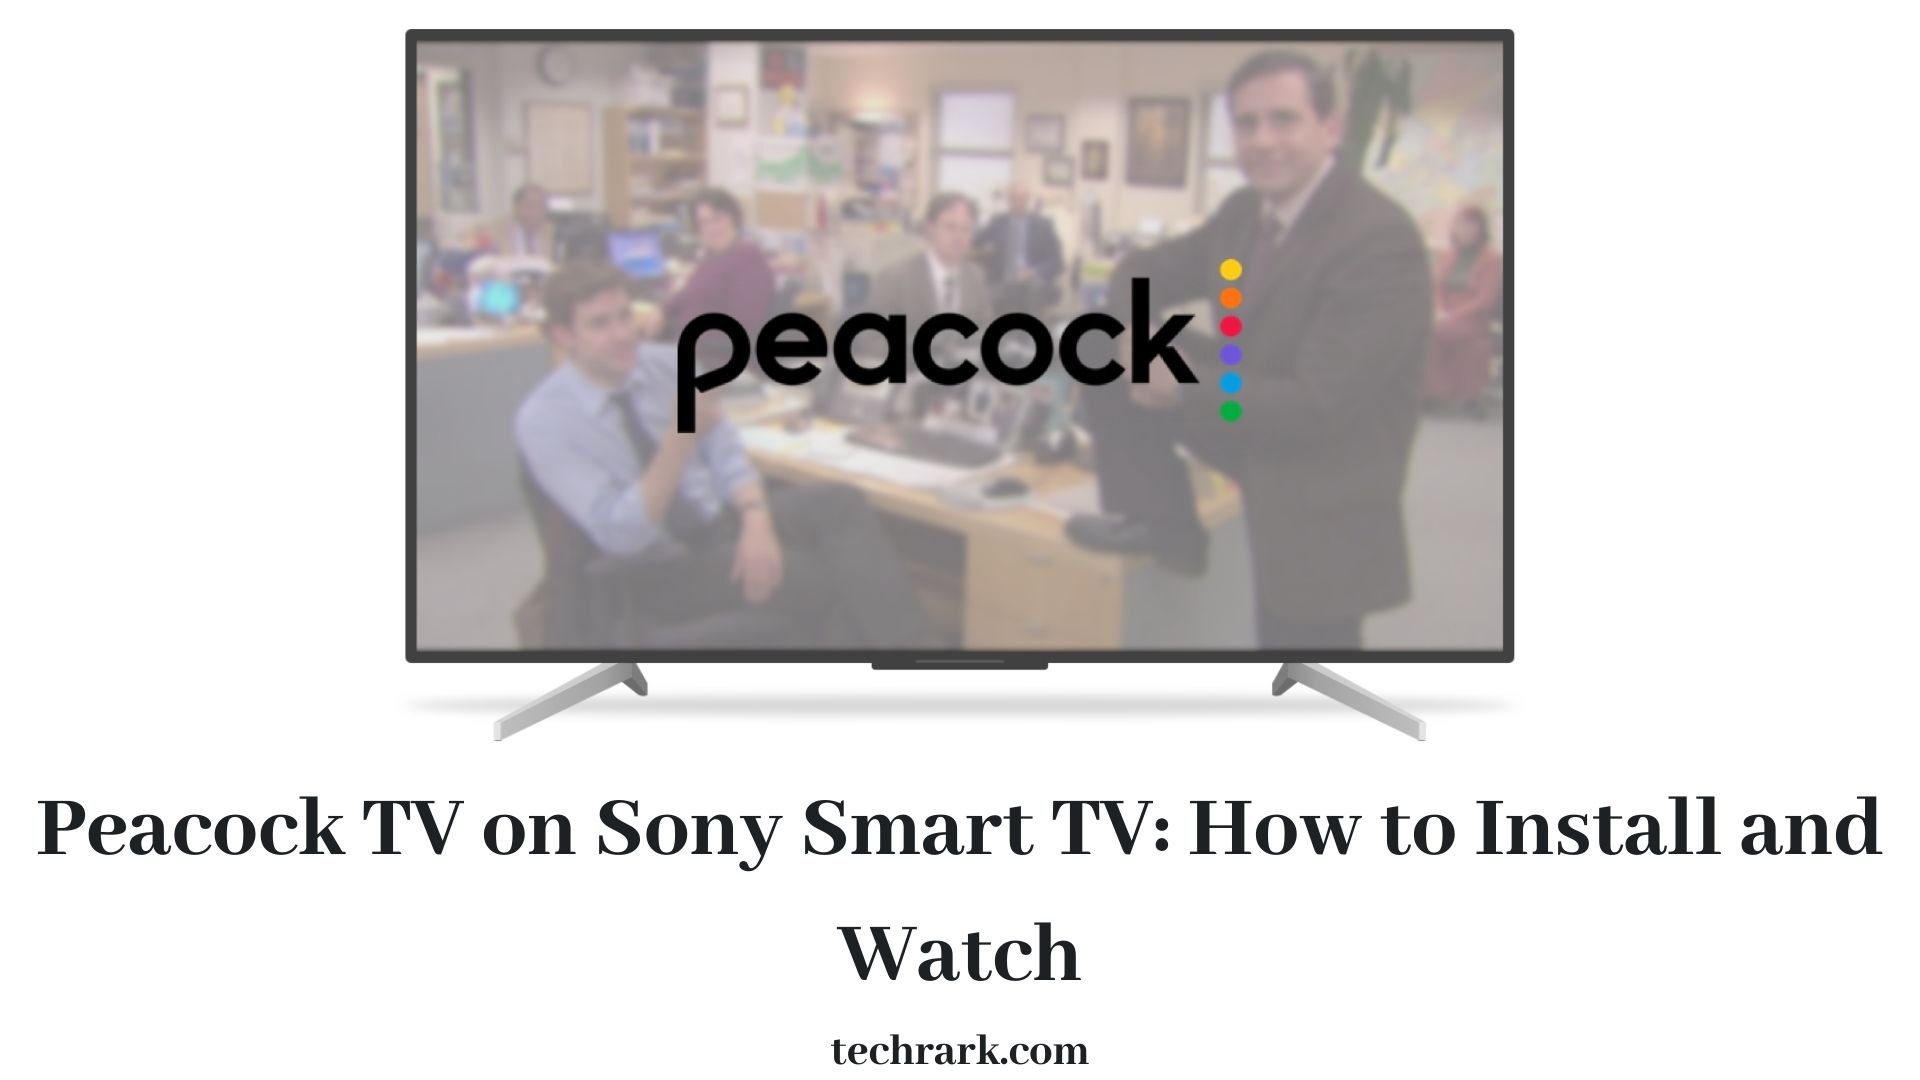 Peacock TV on Sony Smart TV